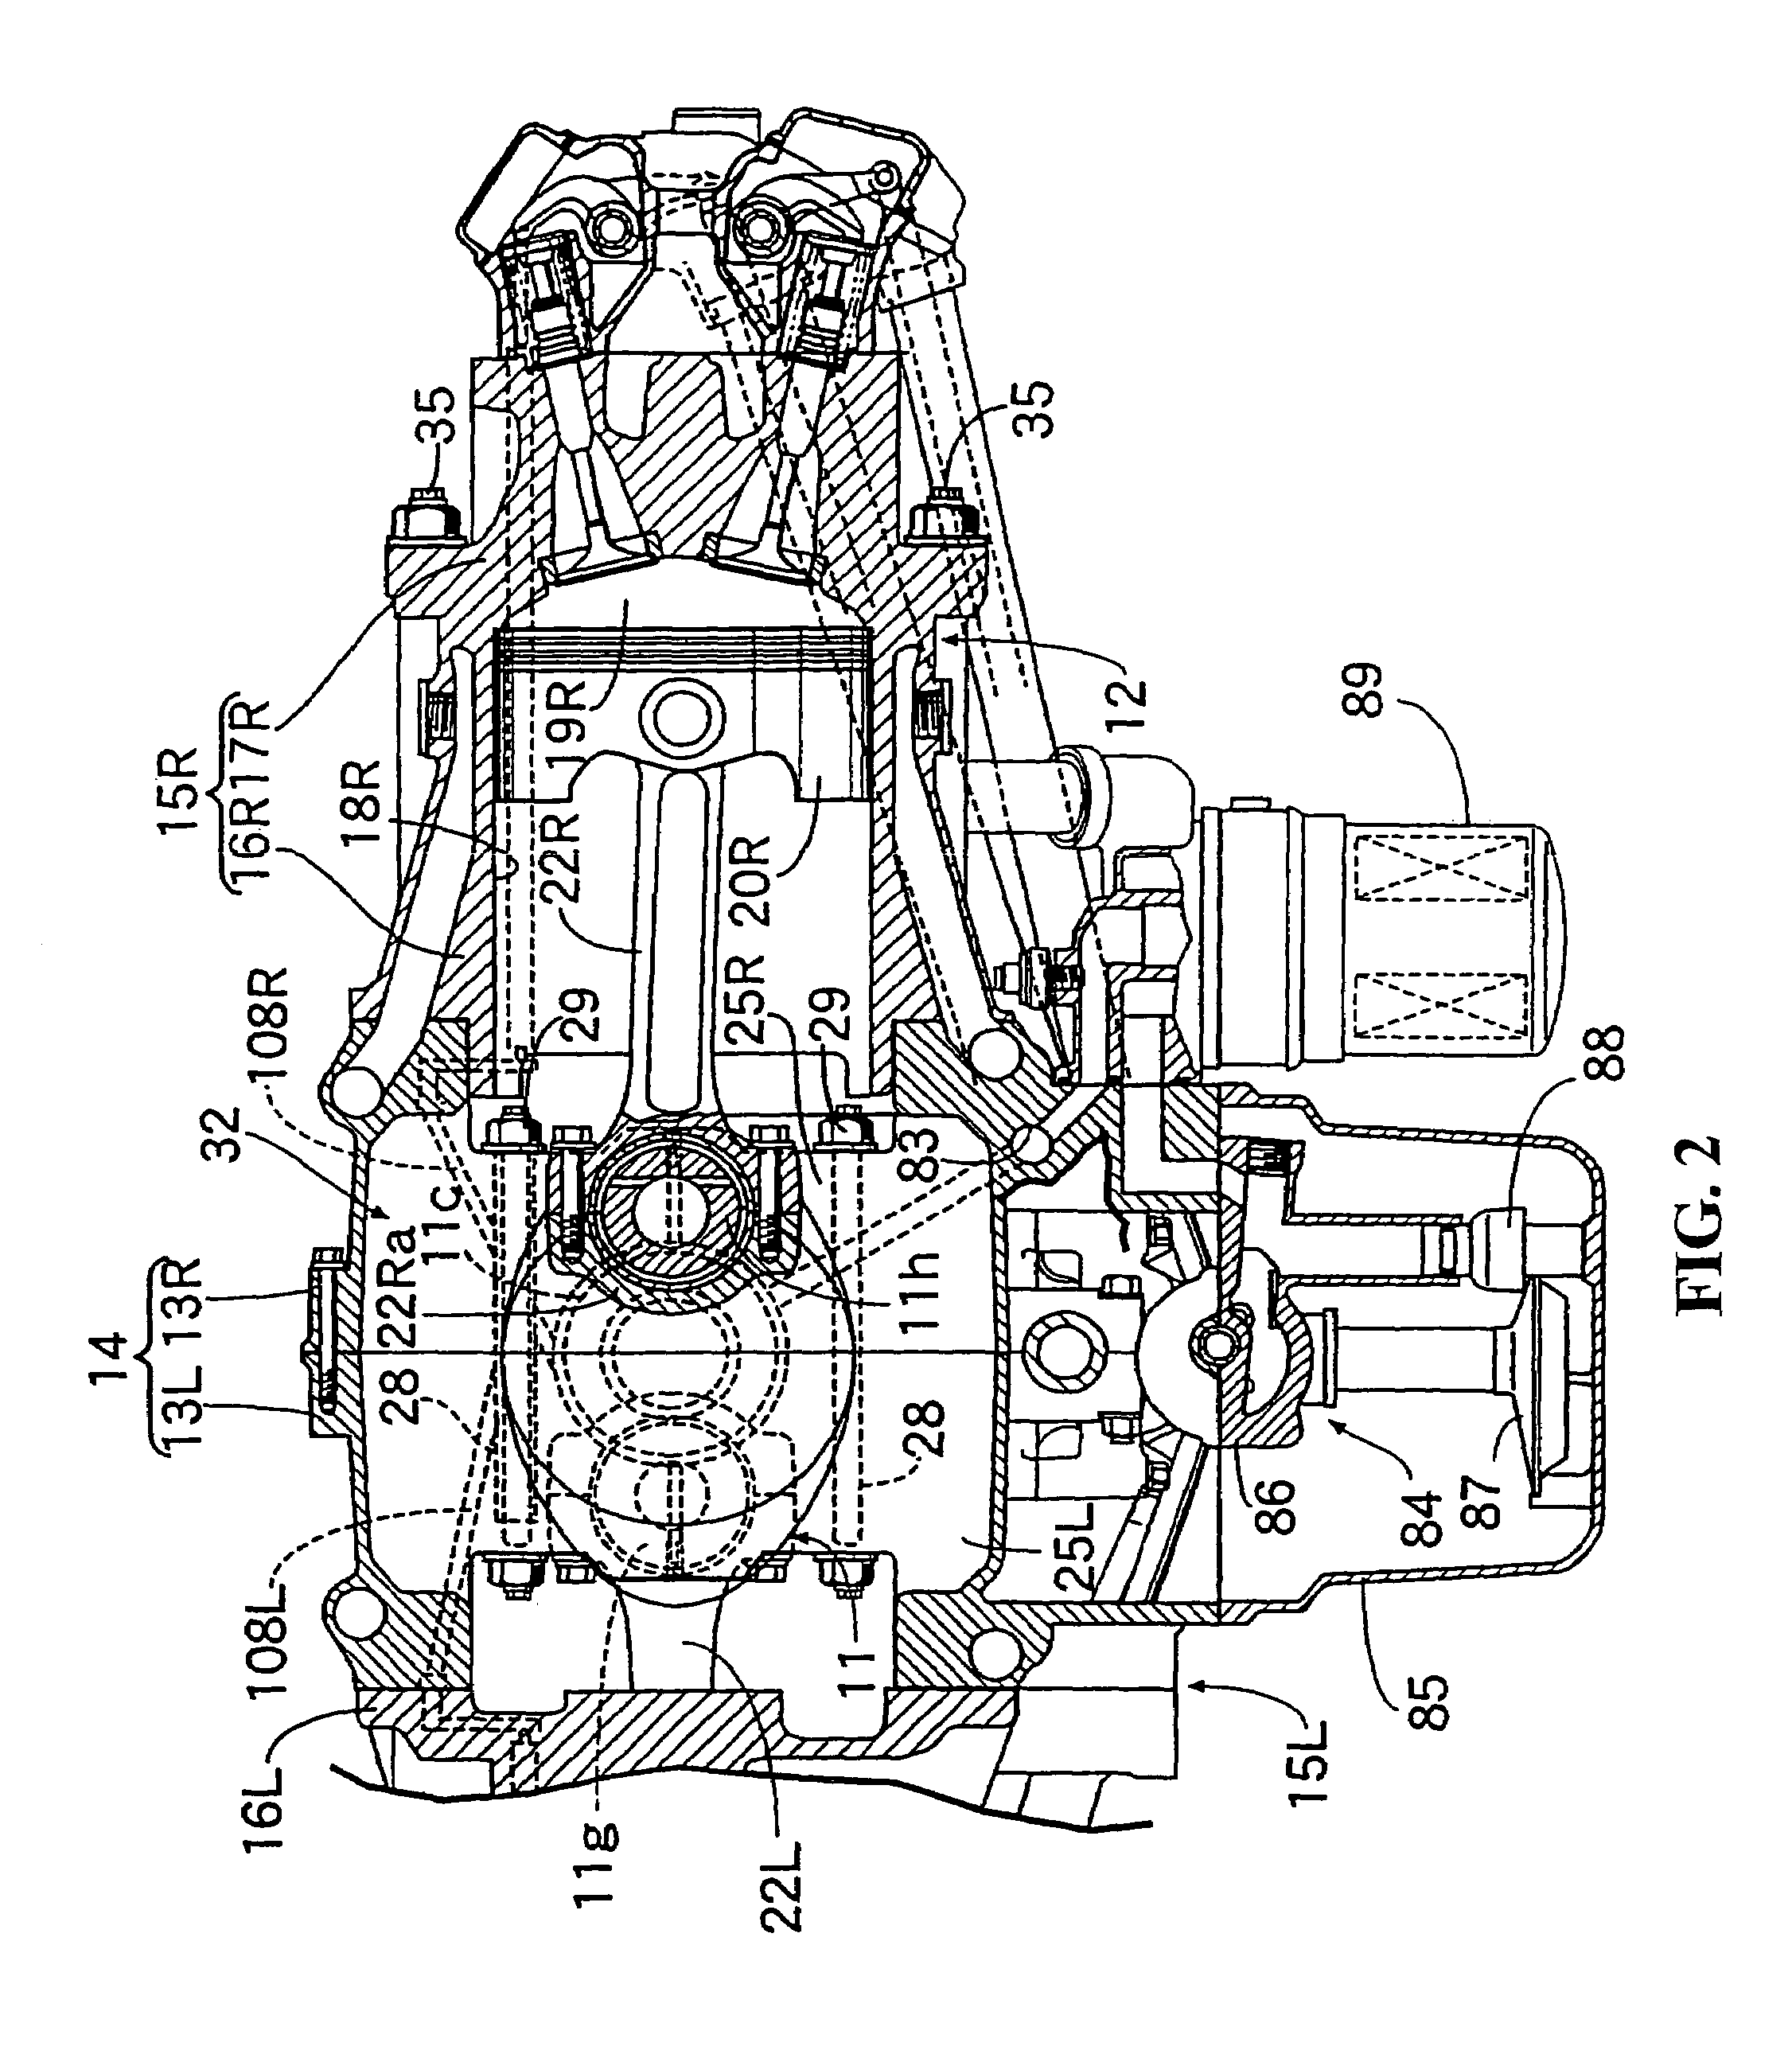 Multi-cylinder engine